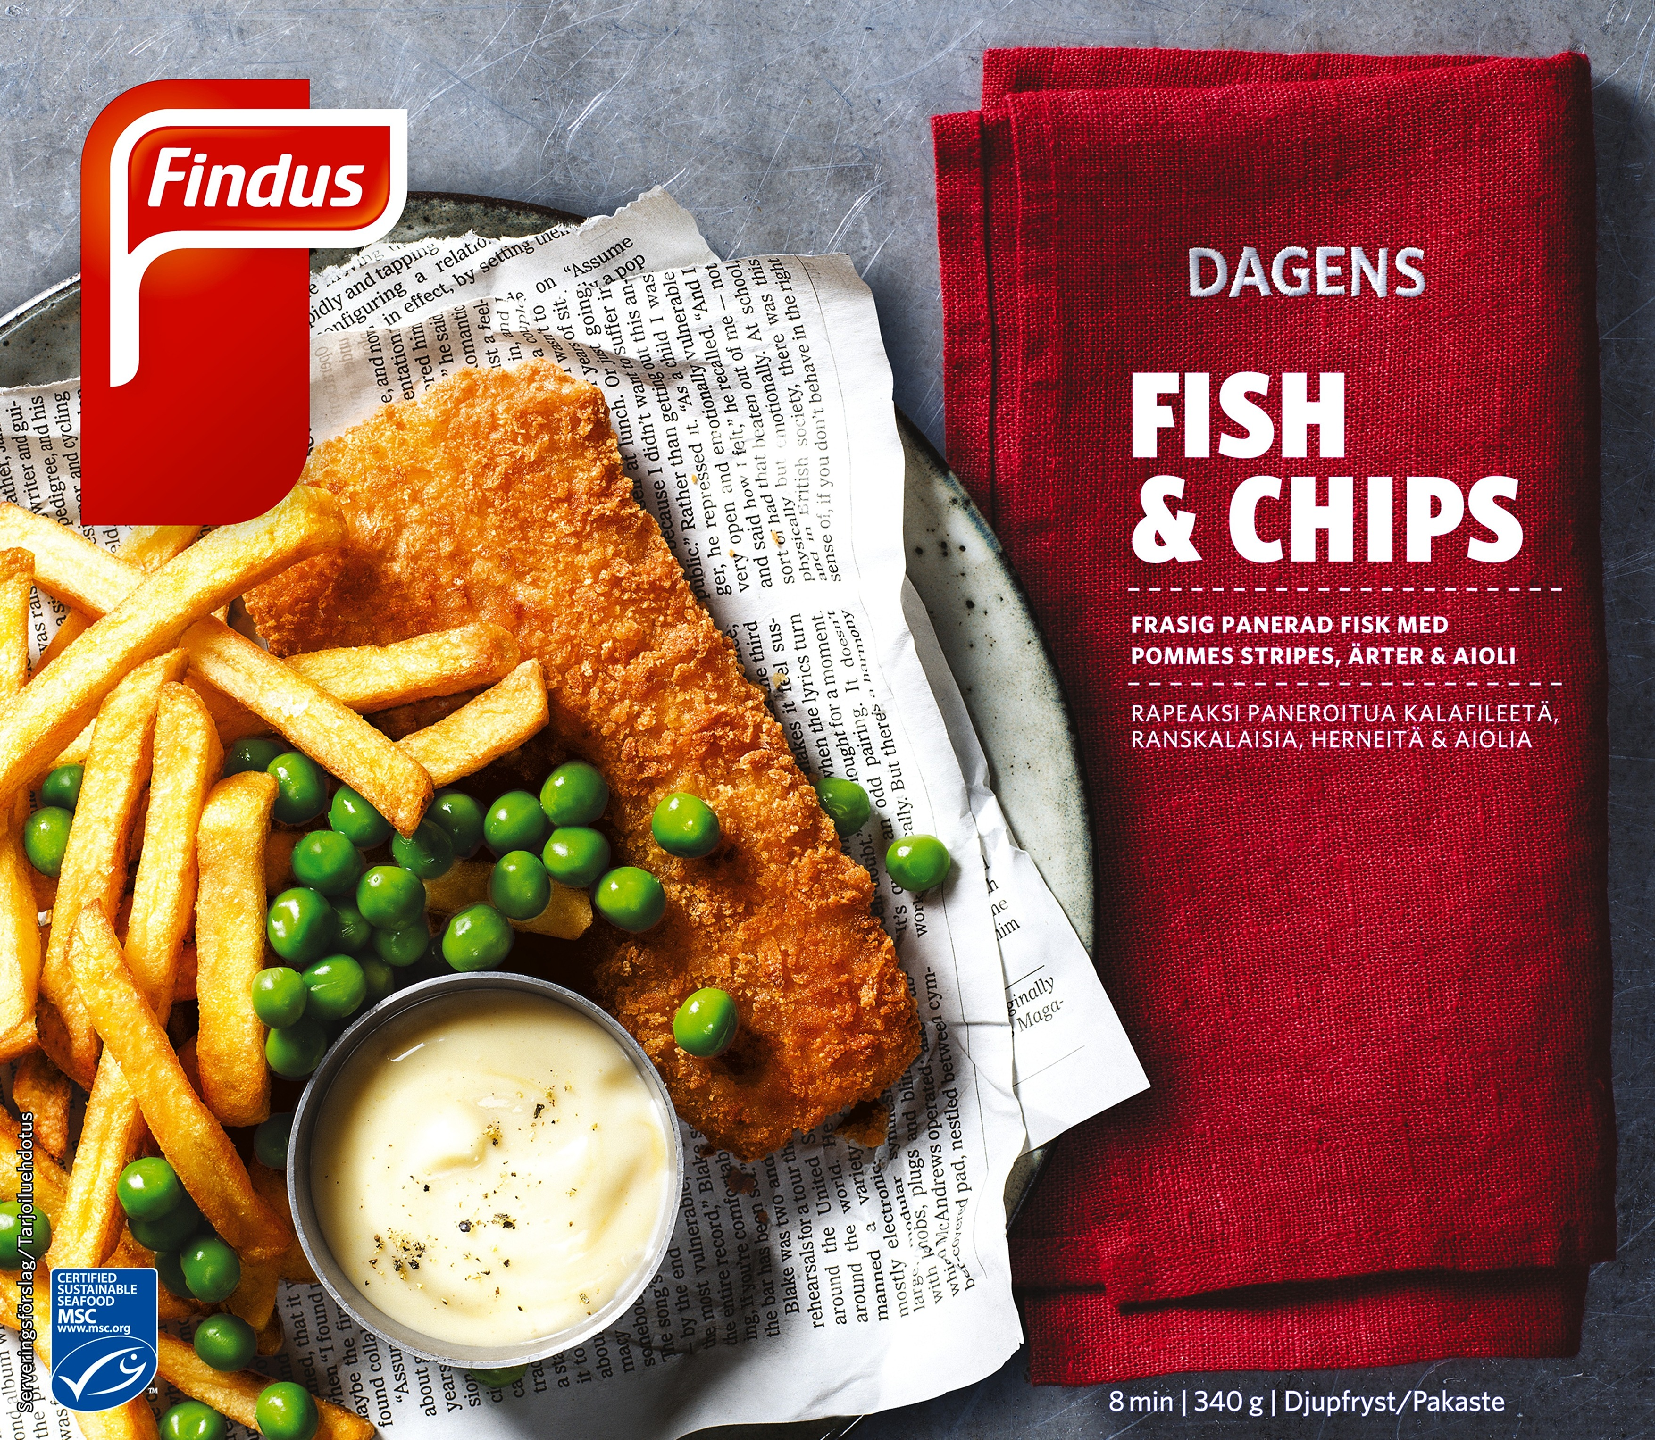 Findus Dagens Fish & Chips MSC 340g pakaste